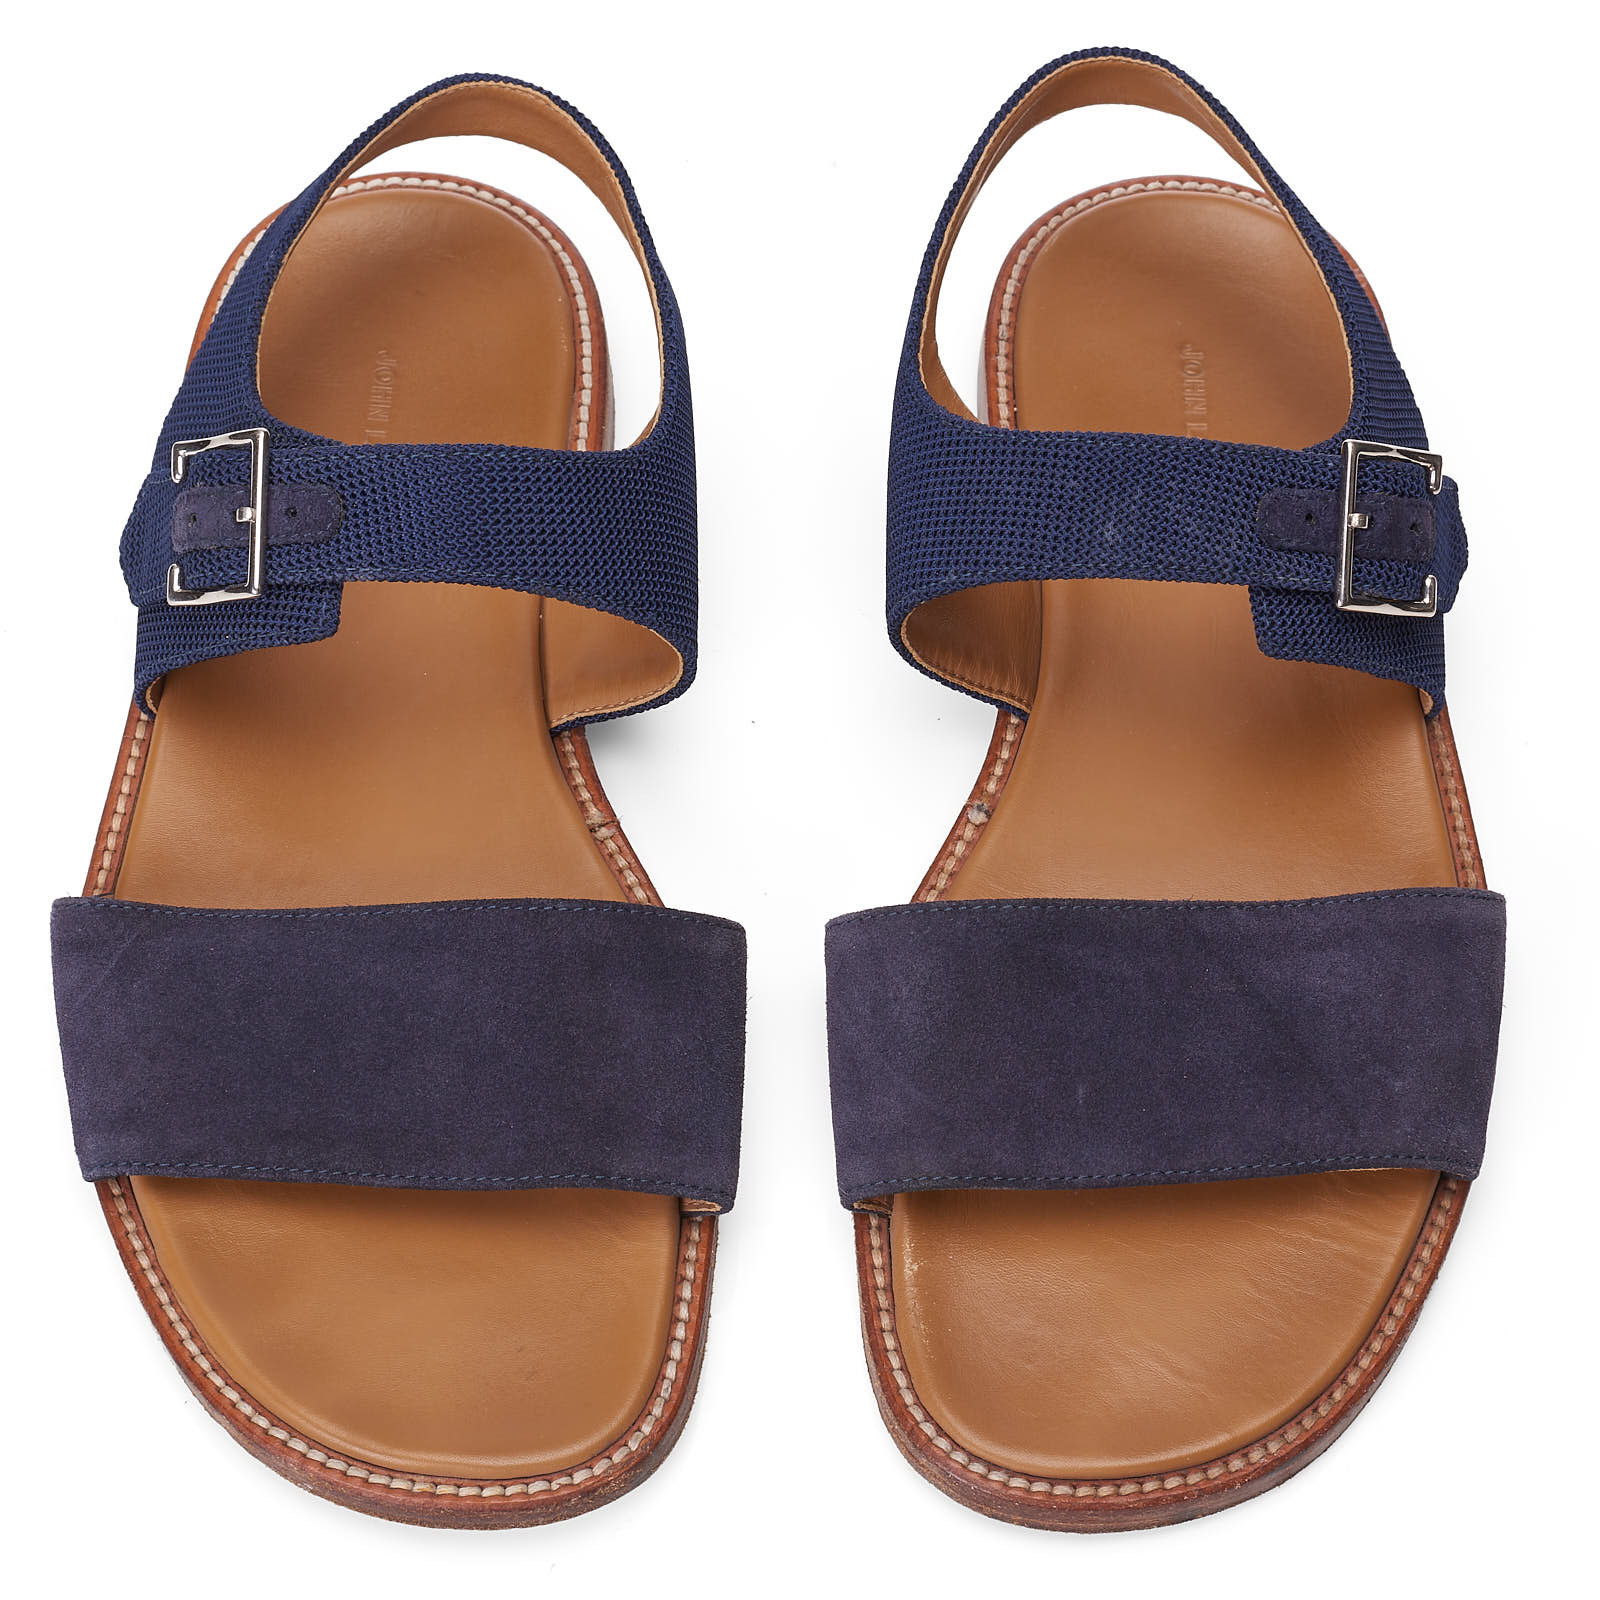 JOHN LOBB "Stratton" Blue Suede Leather Sandal Shoes 8.5E US 9 Last 1712